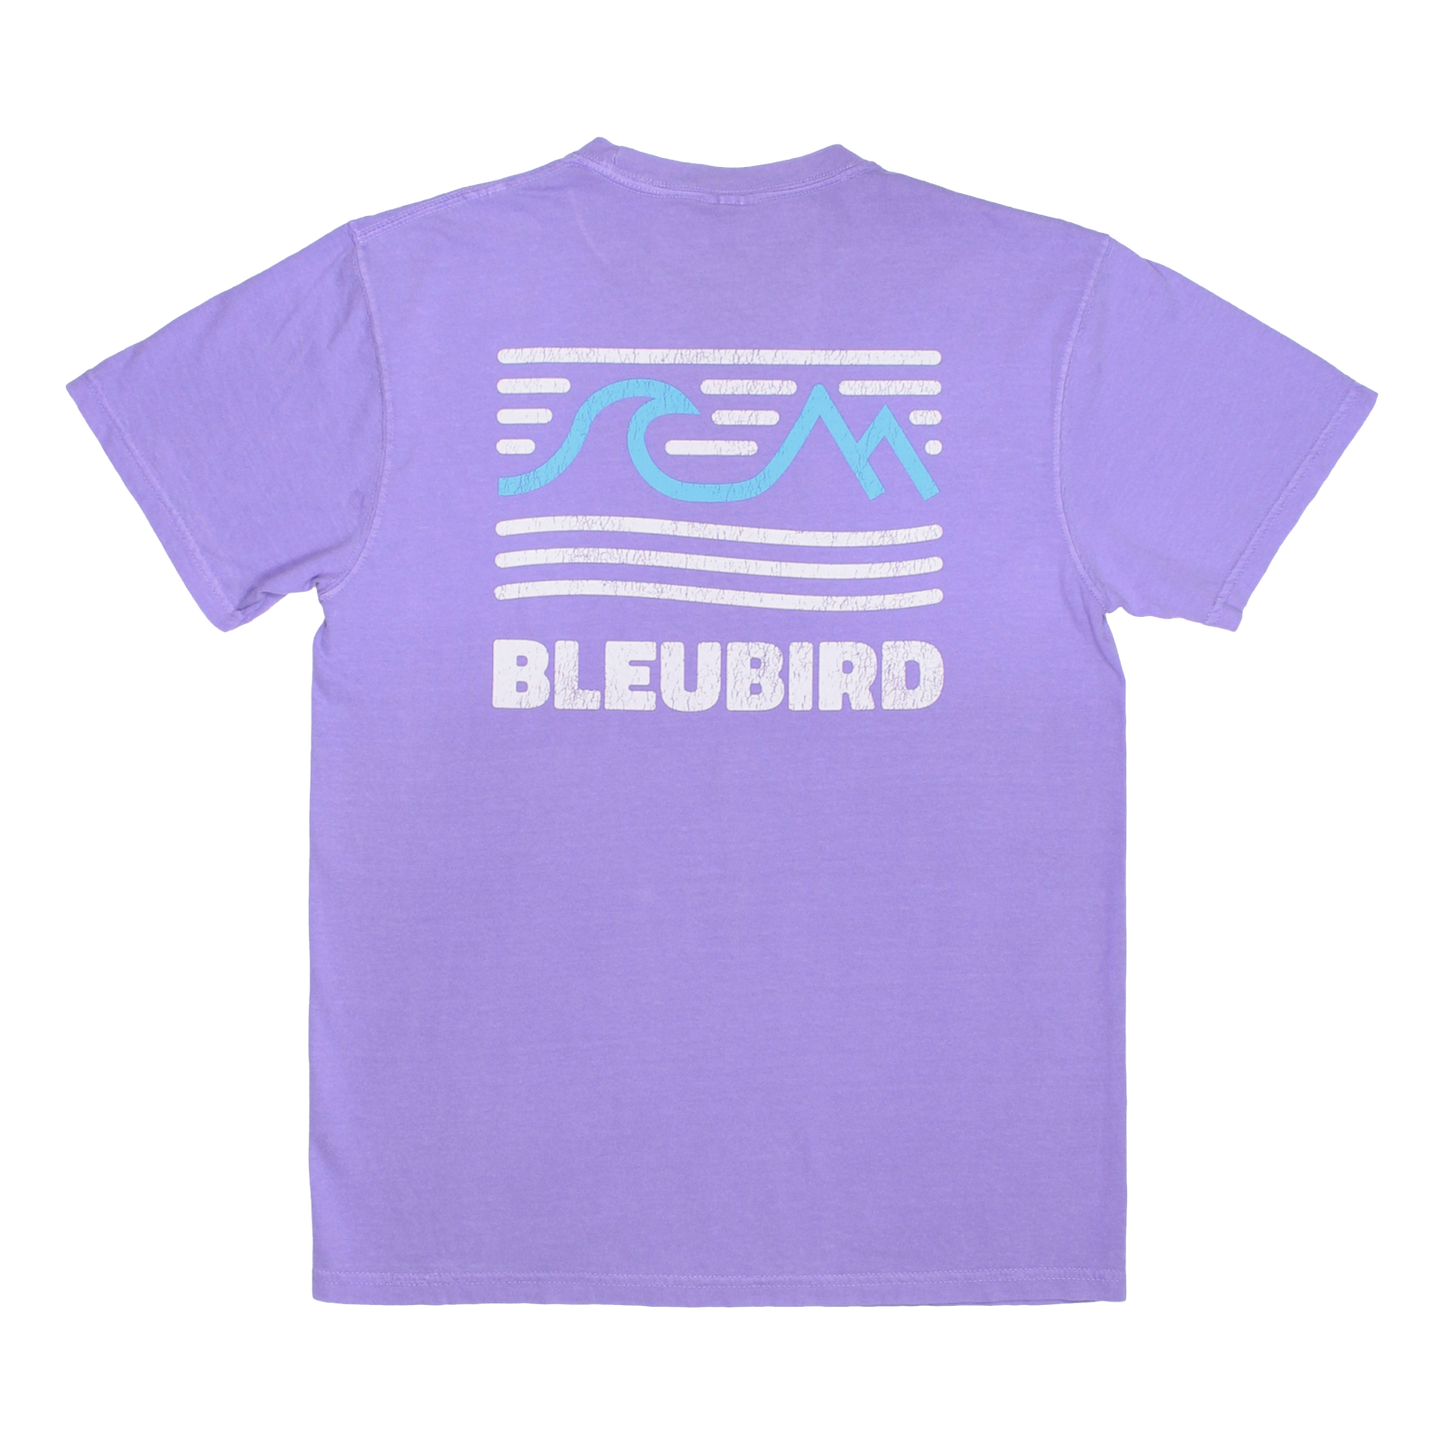 Bleubird Tides Tee